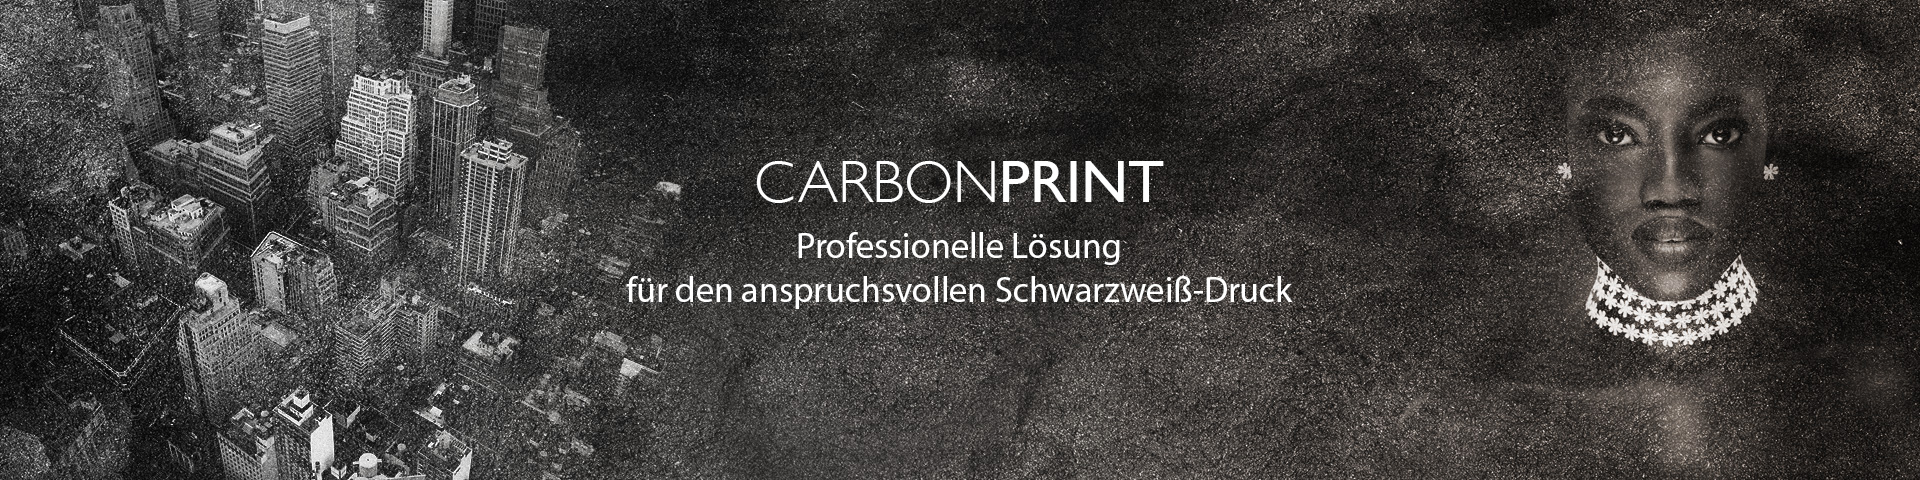 carbonprint-Banner